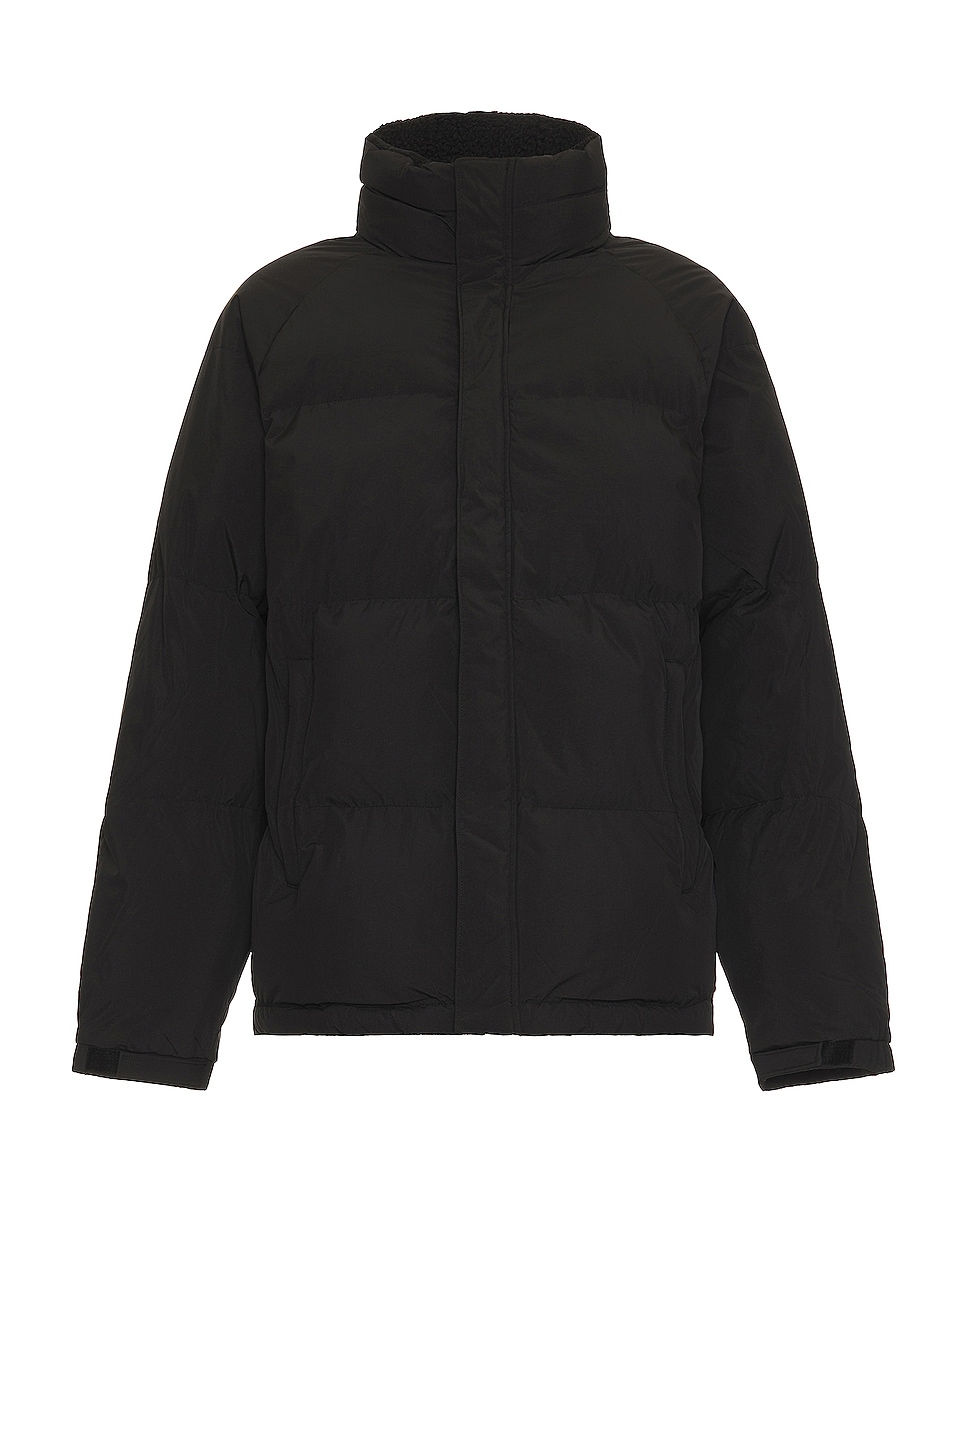 Image 1 of SATURDAYS NYC Enomoto Puffer Jacket in Black